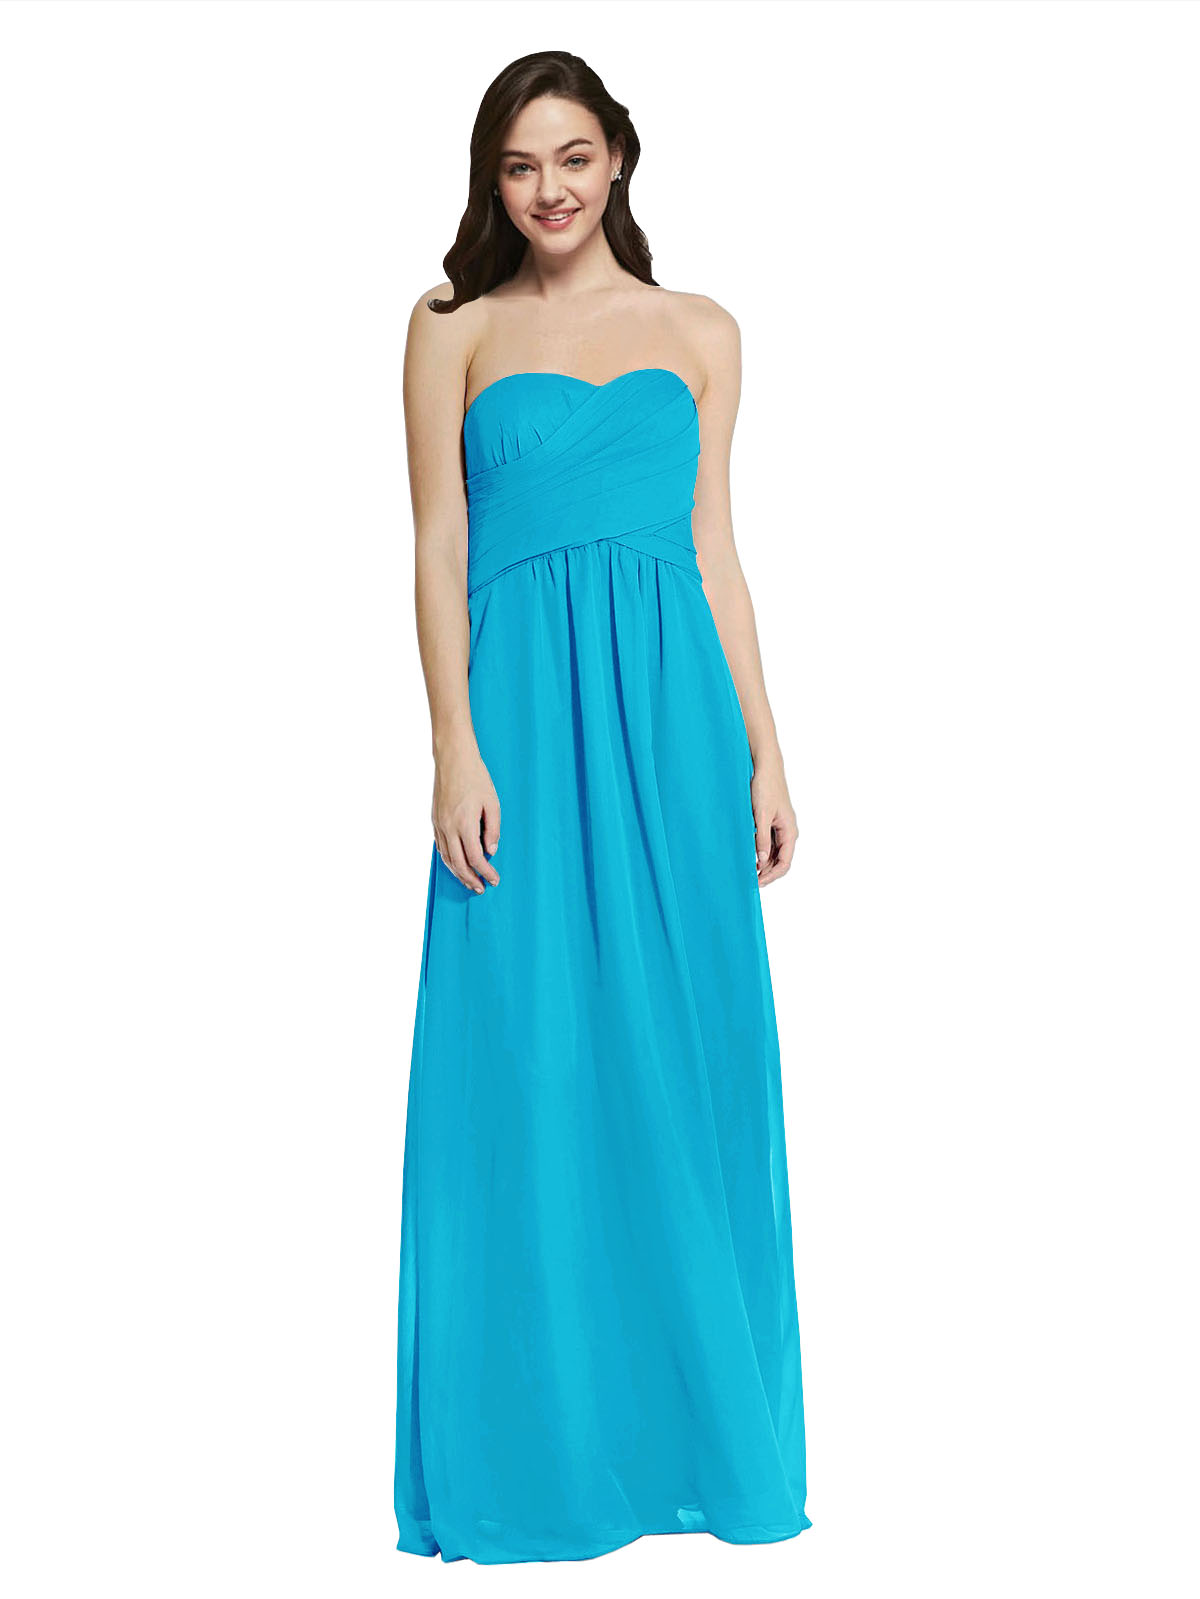 Long A-Line Strapless Sweetheart Sleeveless Turquoise Chiffon Bridesmaid Dress Jenner